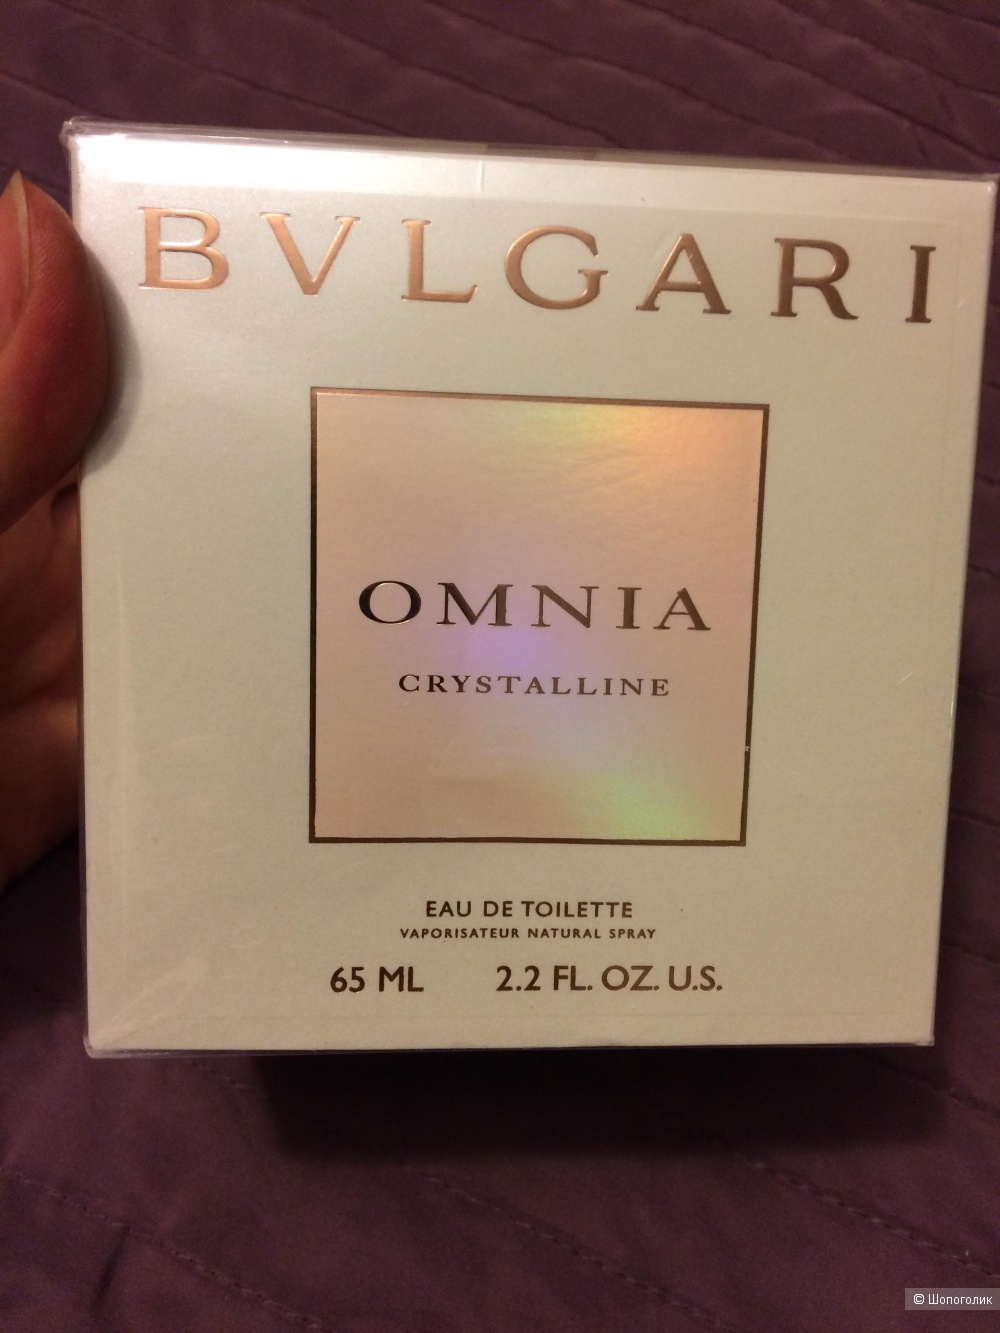 Bvlgari Omnia Crystalline 65 ml. Eau de toilette